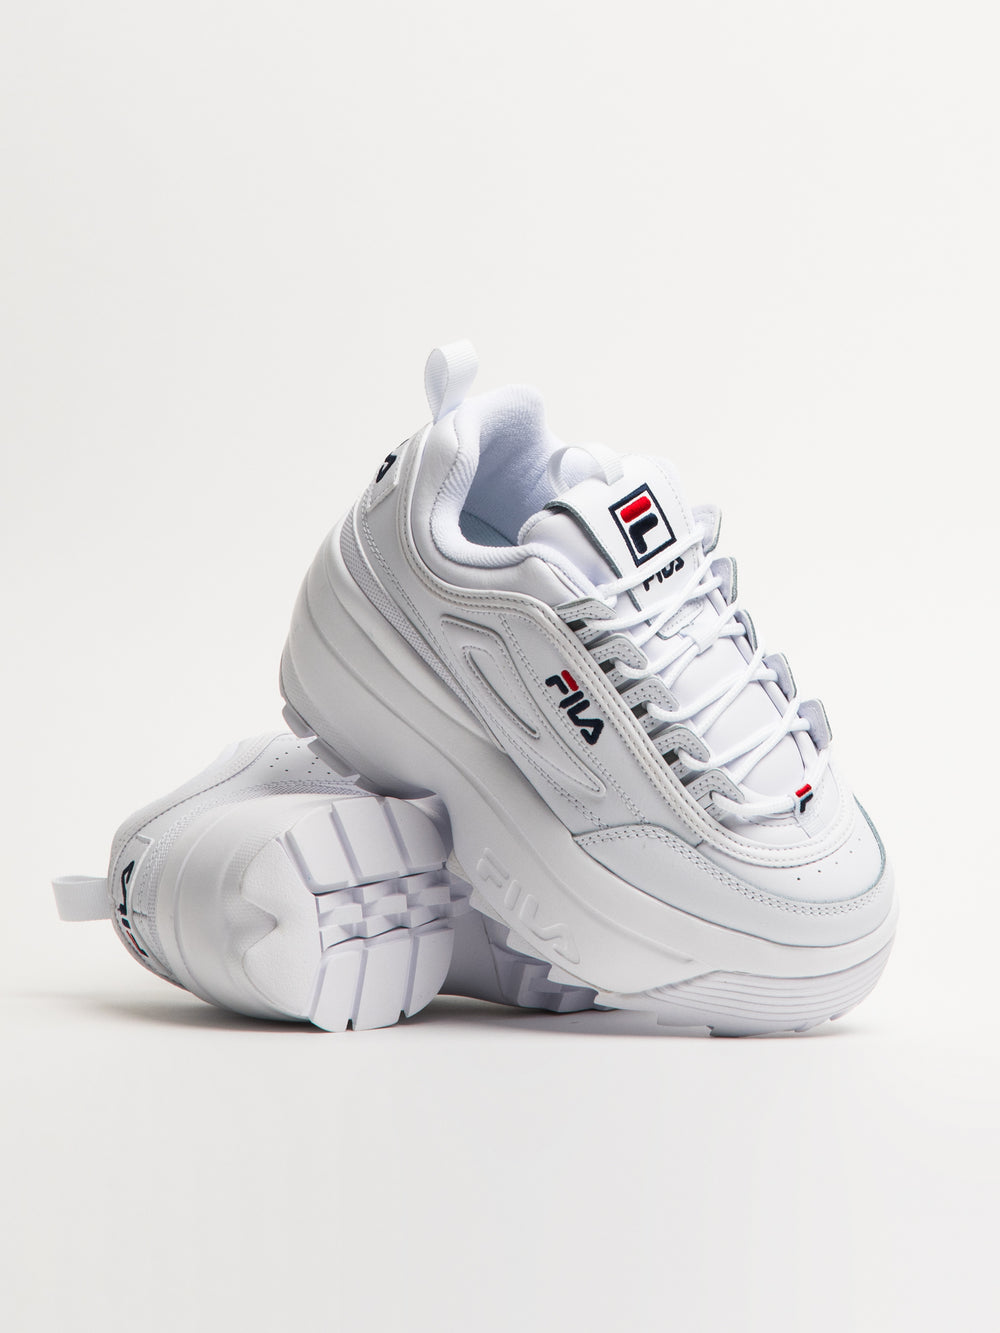 Fila Disruptor 2 Premium Shoes Women's Size 7 White Chunky Sneaker